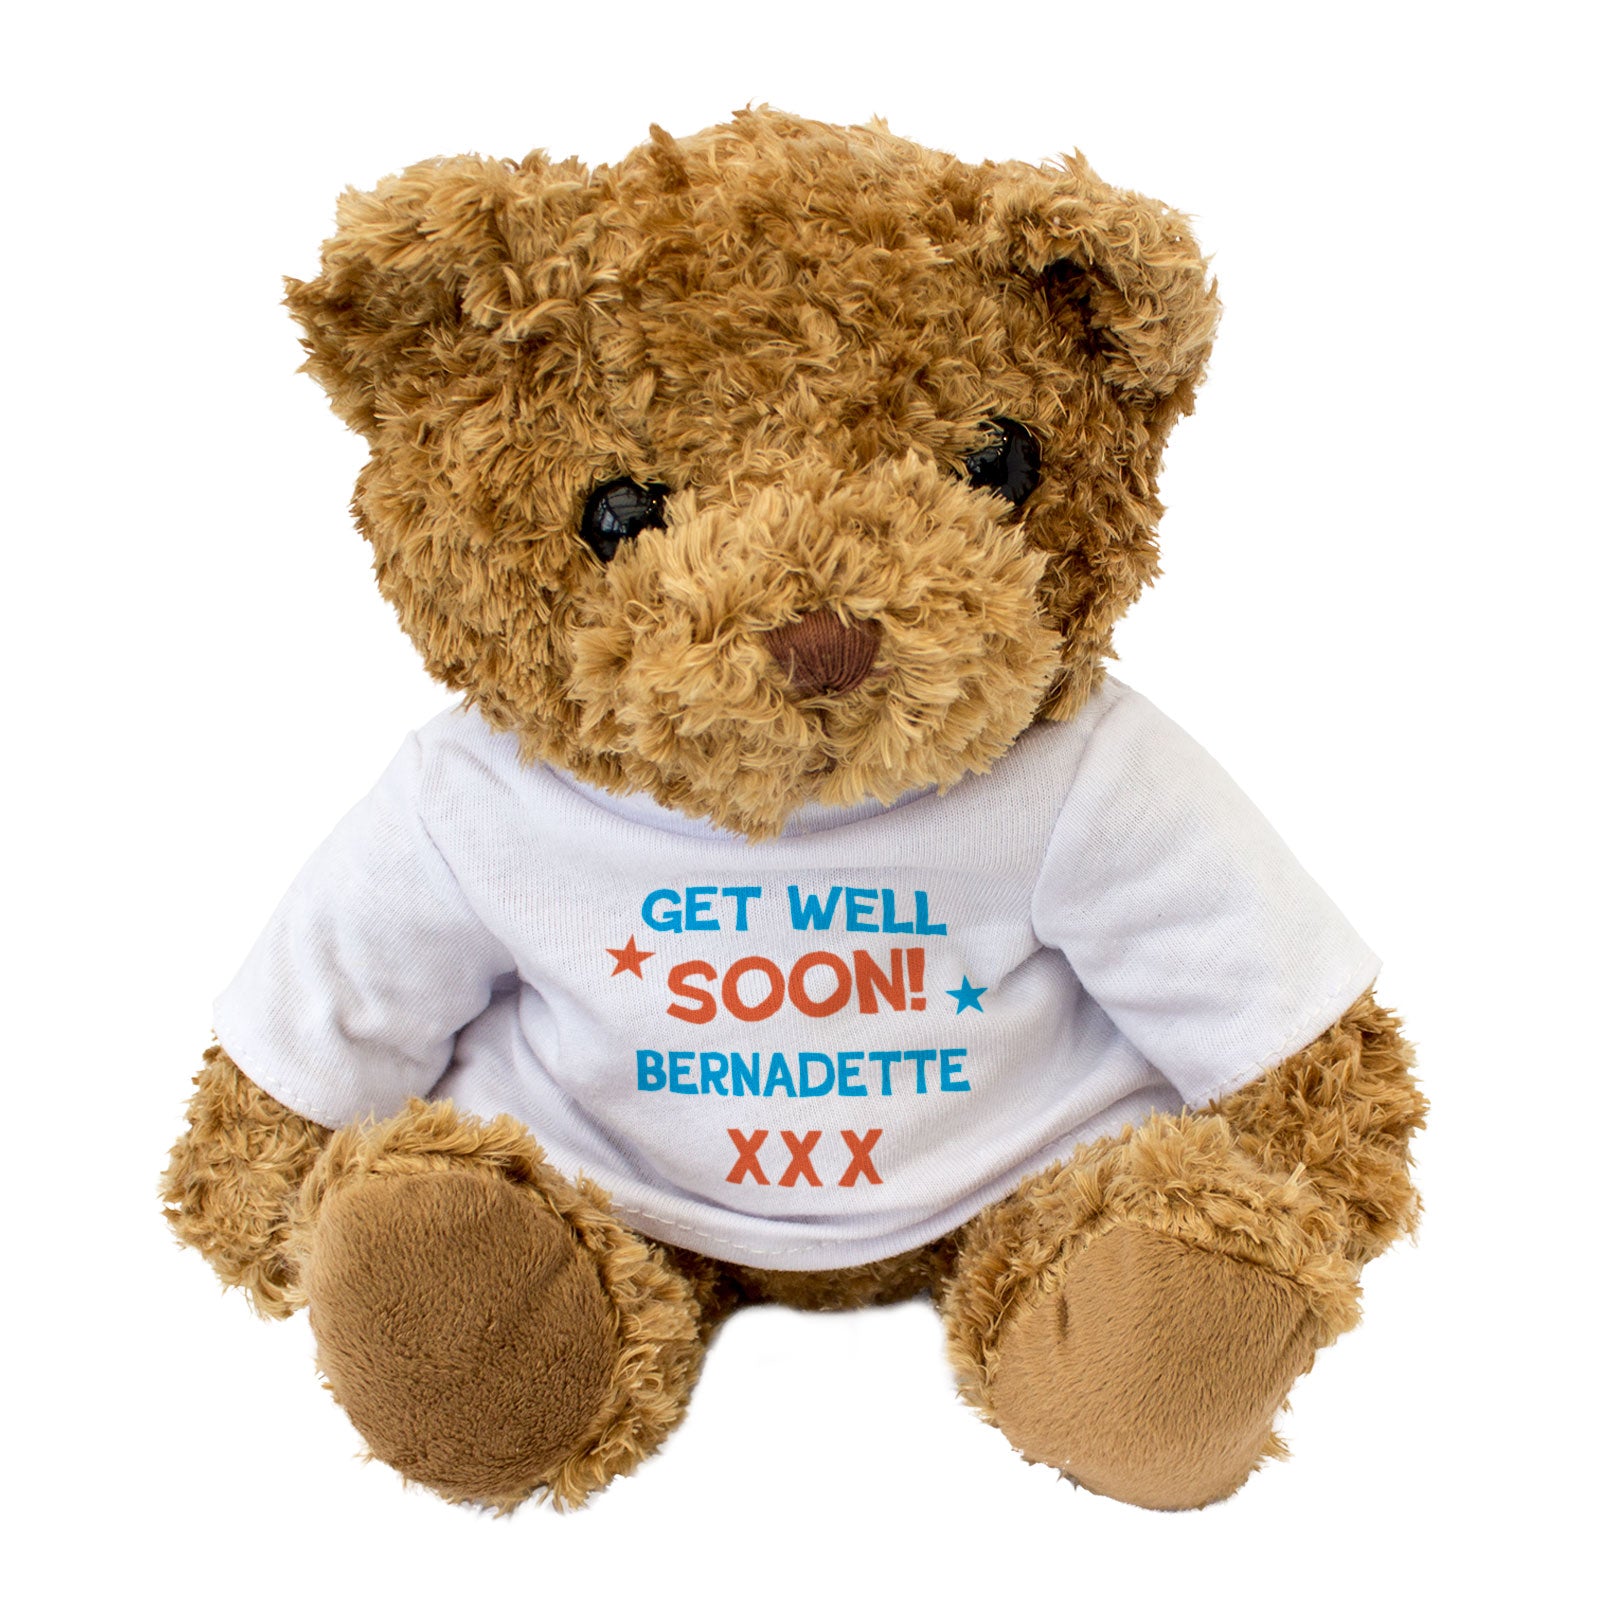 Get Well Soon Bernadette - Teddy Bear